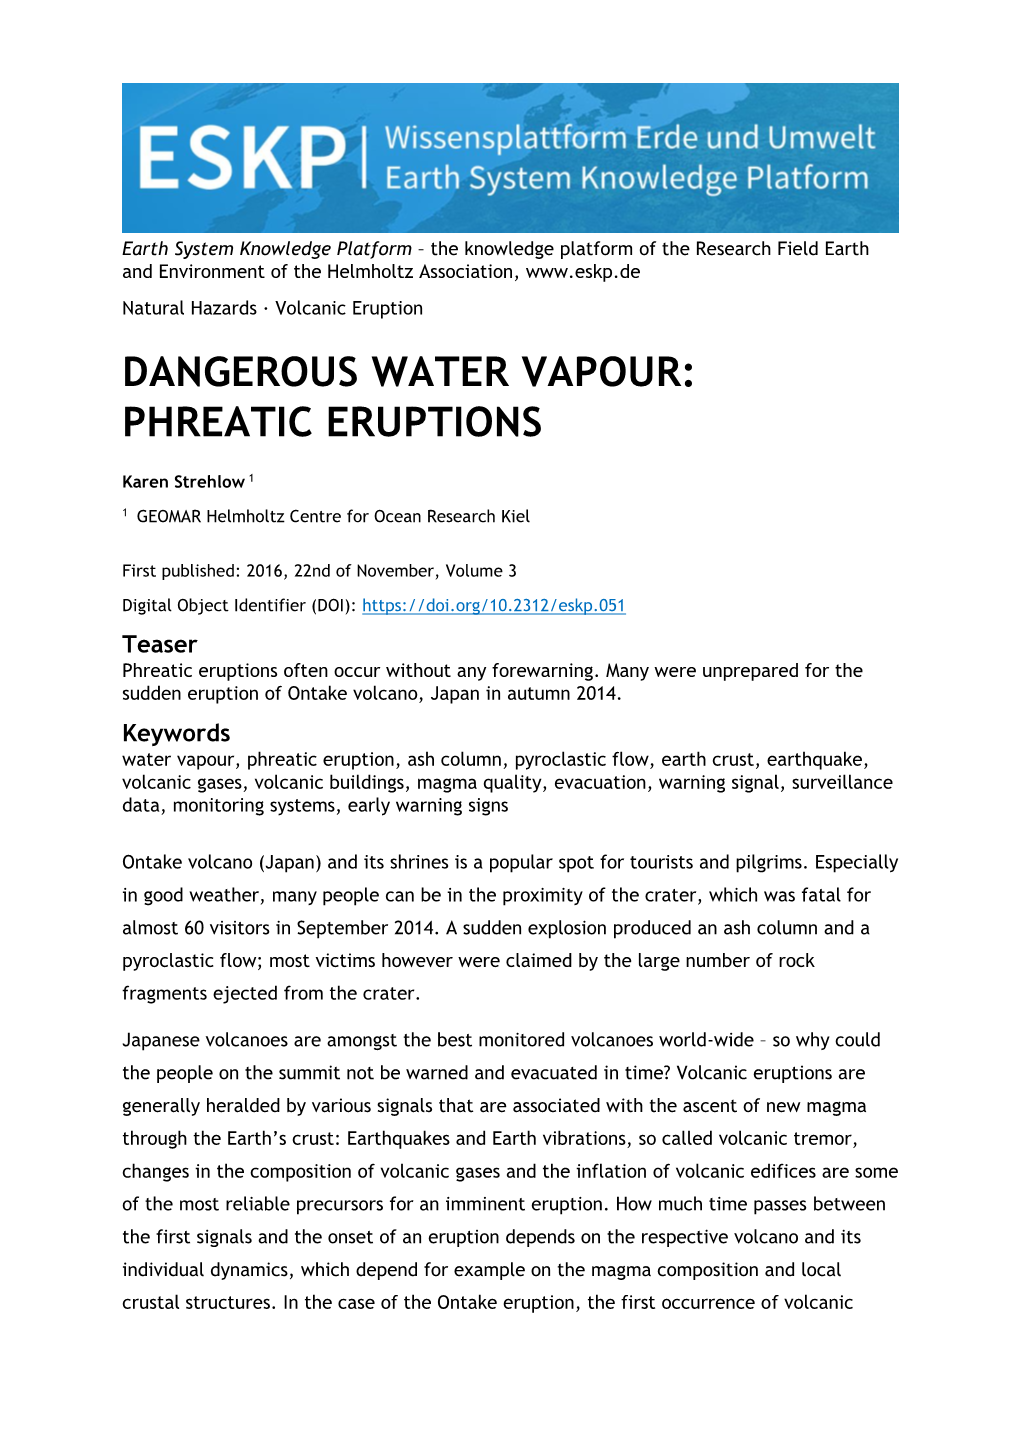 Phreatic Eruptions